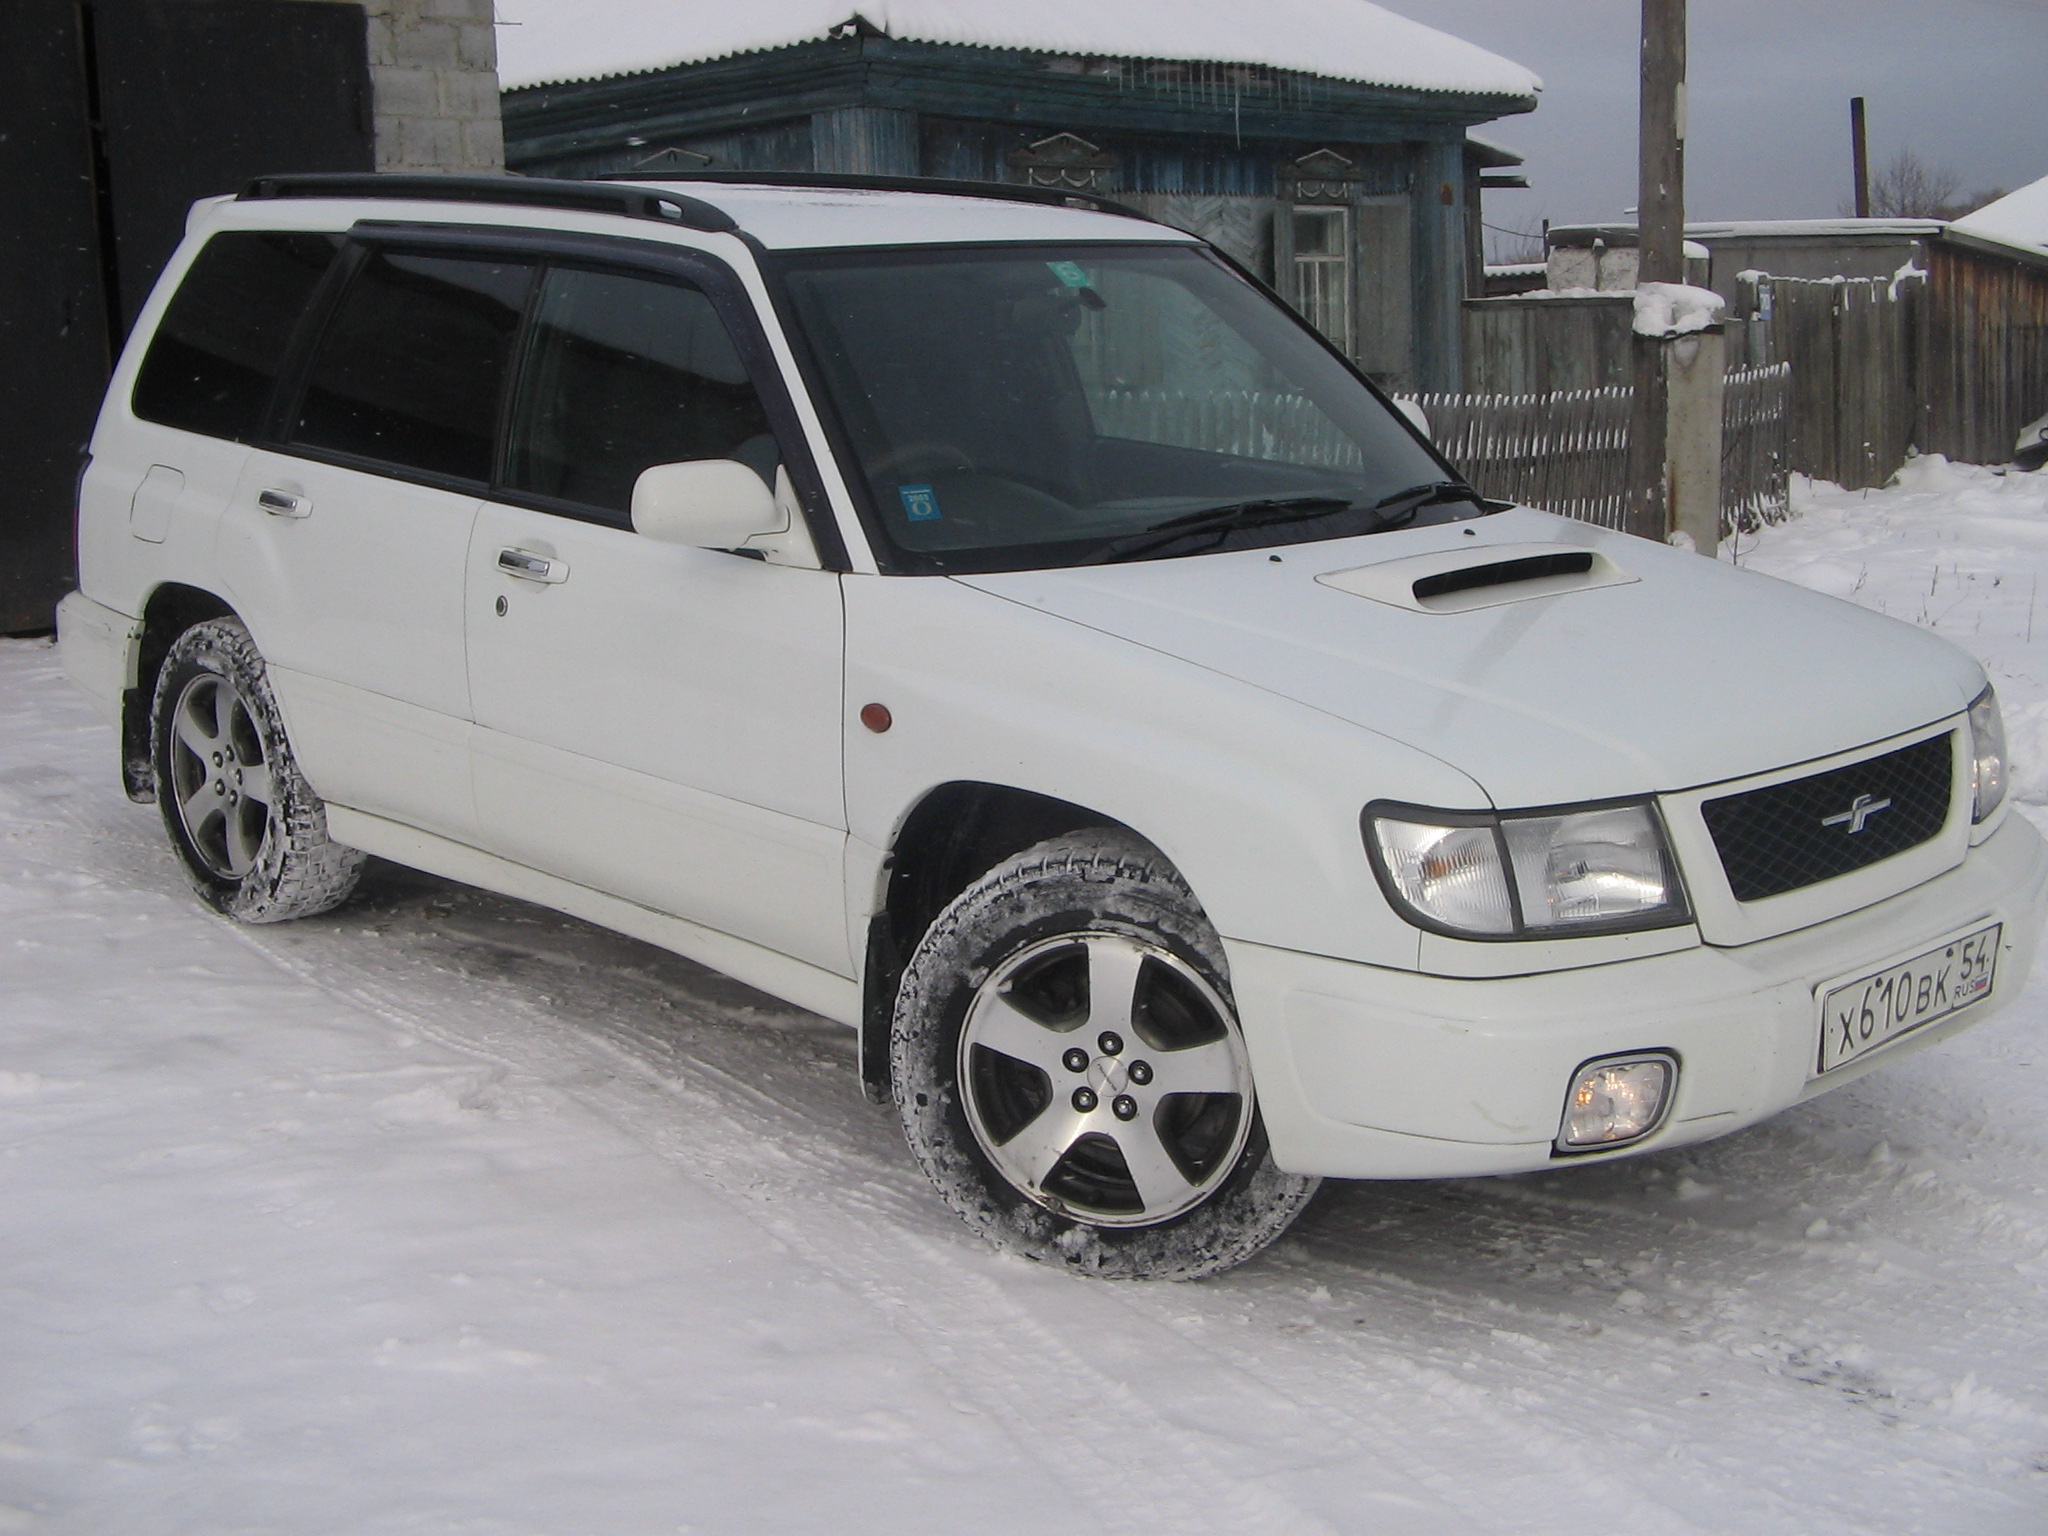 1998 Subaru Forester